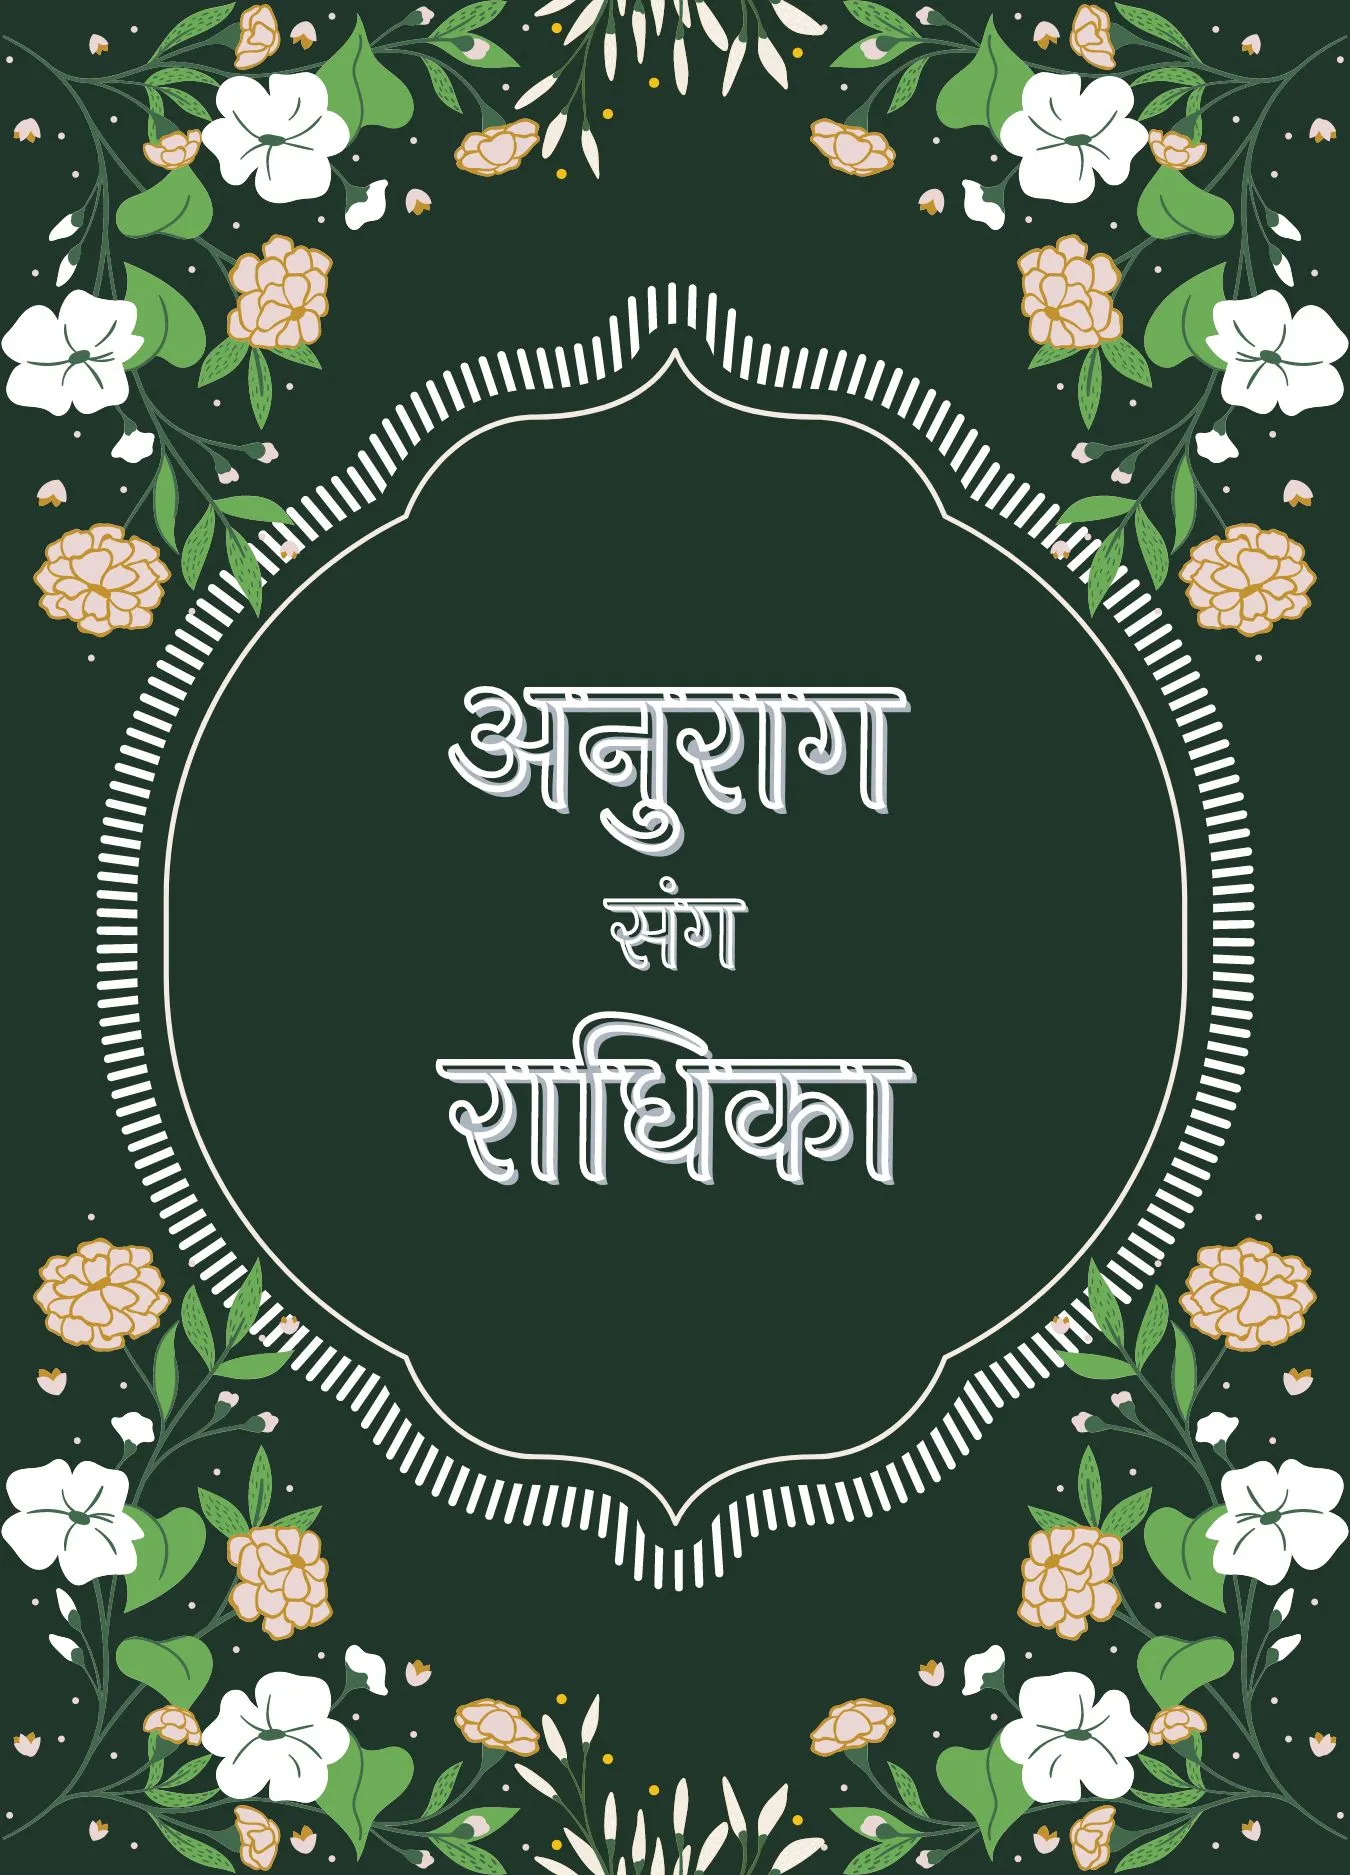 shadi invitation card in hindi